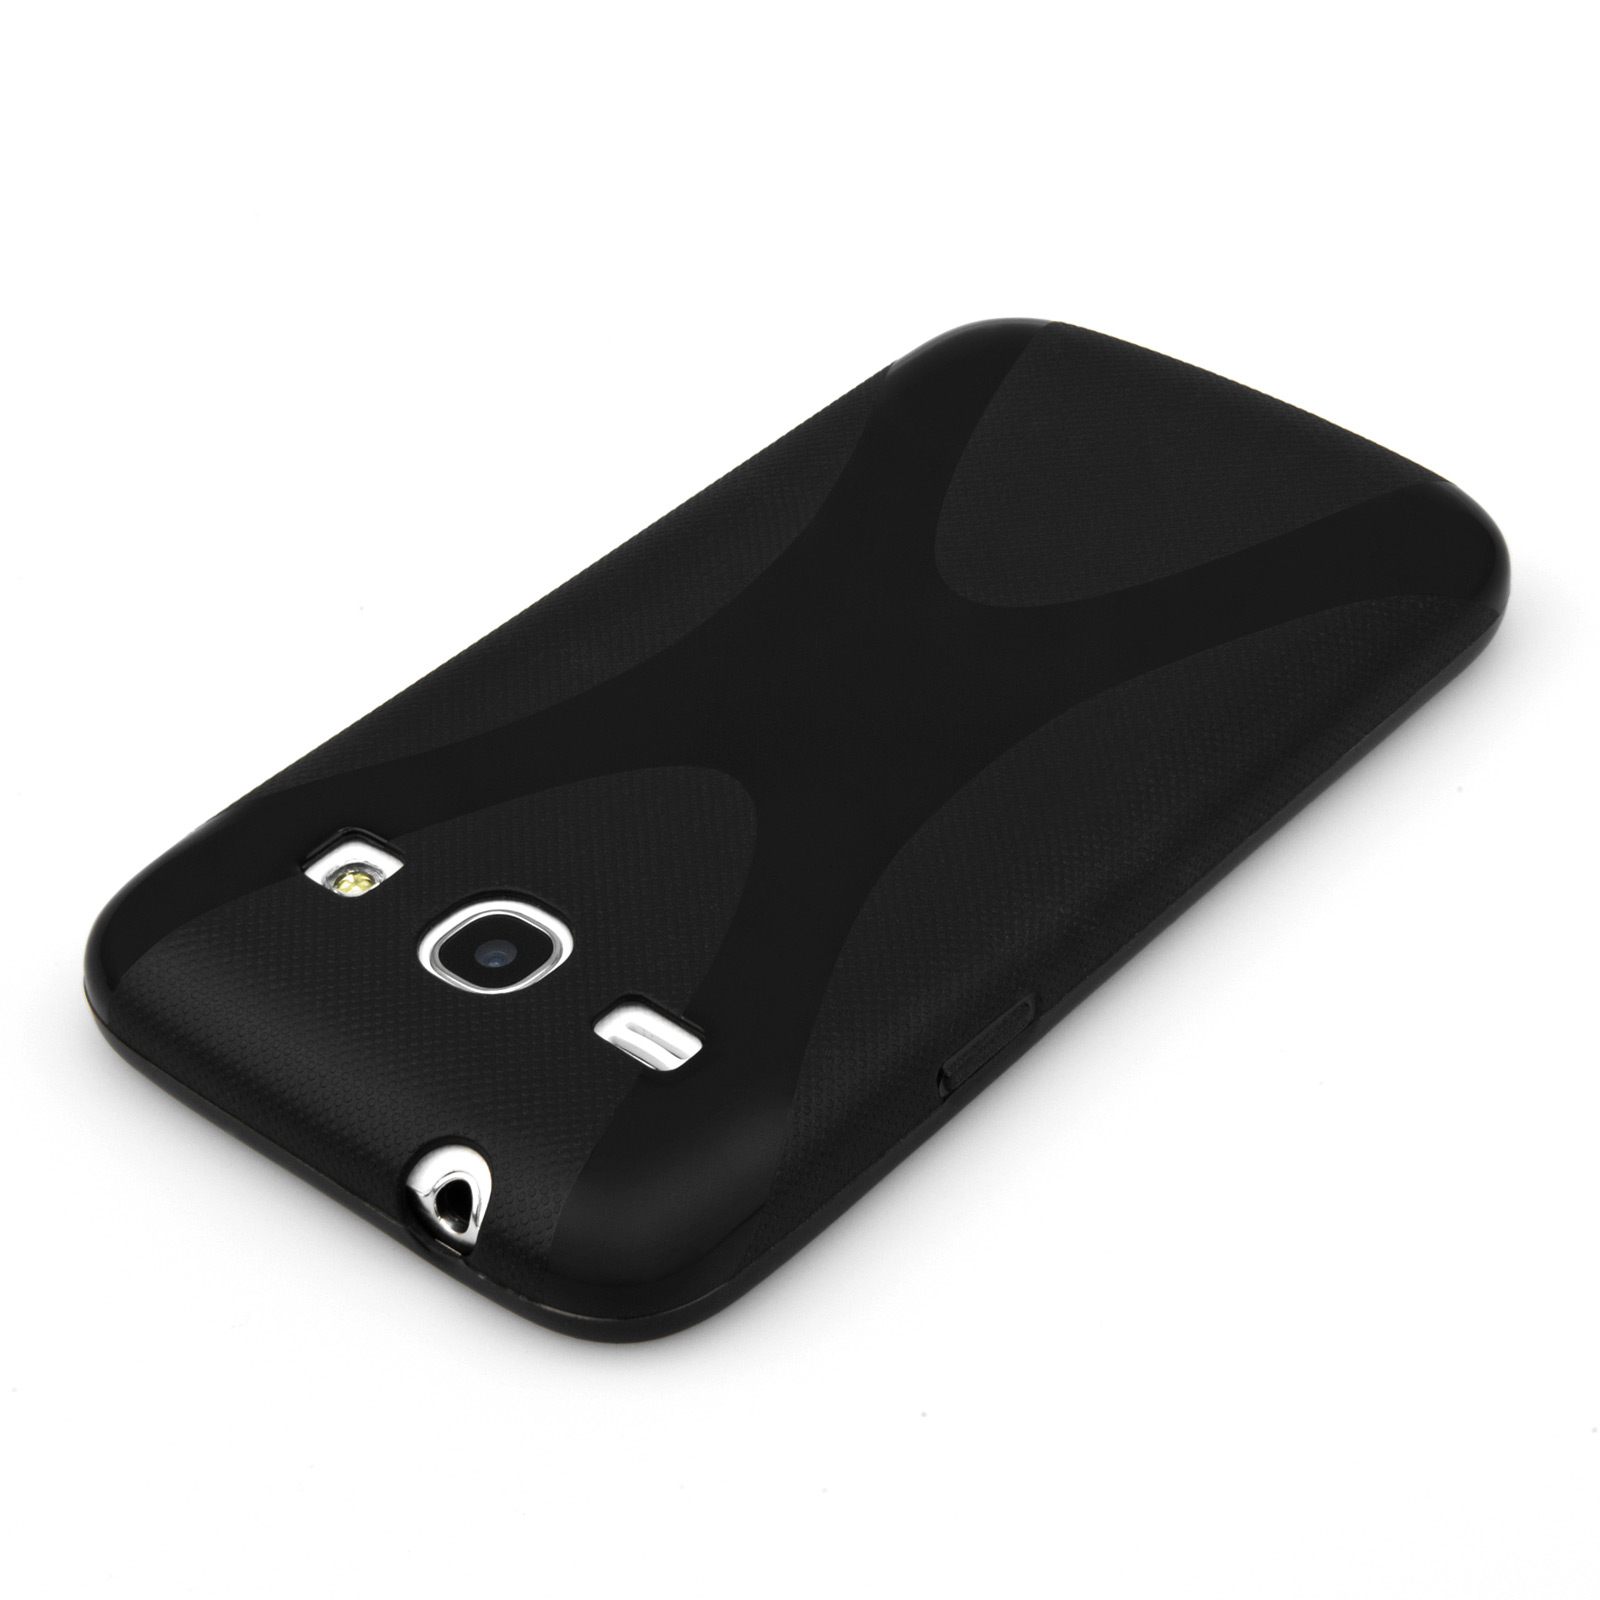 YouSave Samsung Galaxy Core Plus Silicone Gel X-Line Case - Black